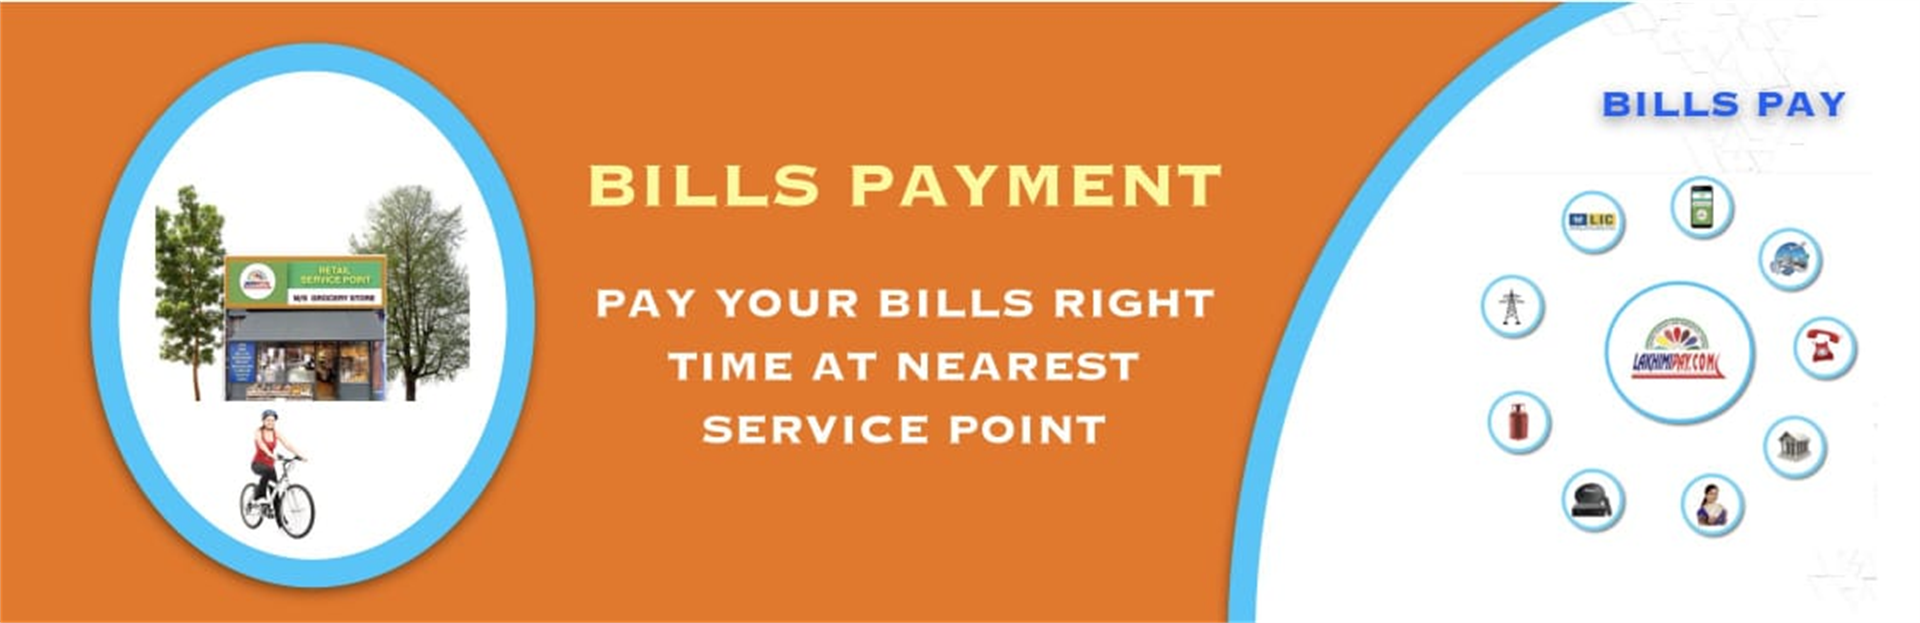 Bills Payment